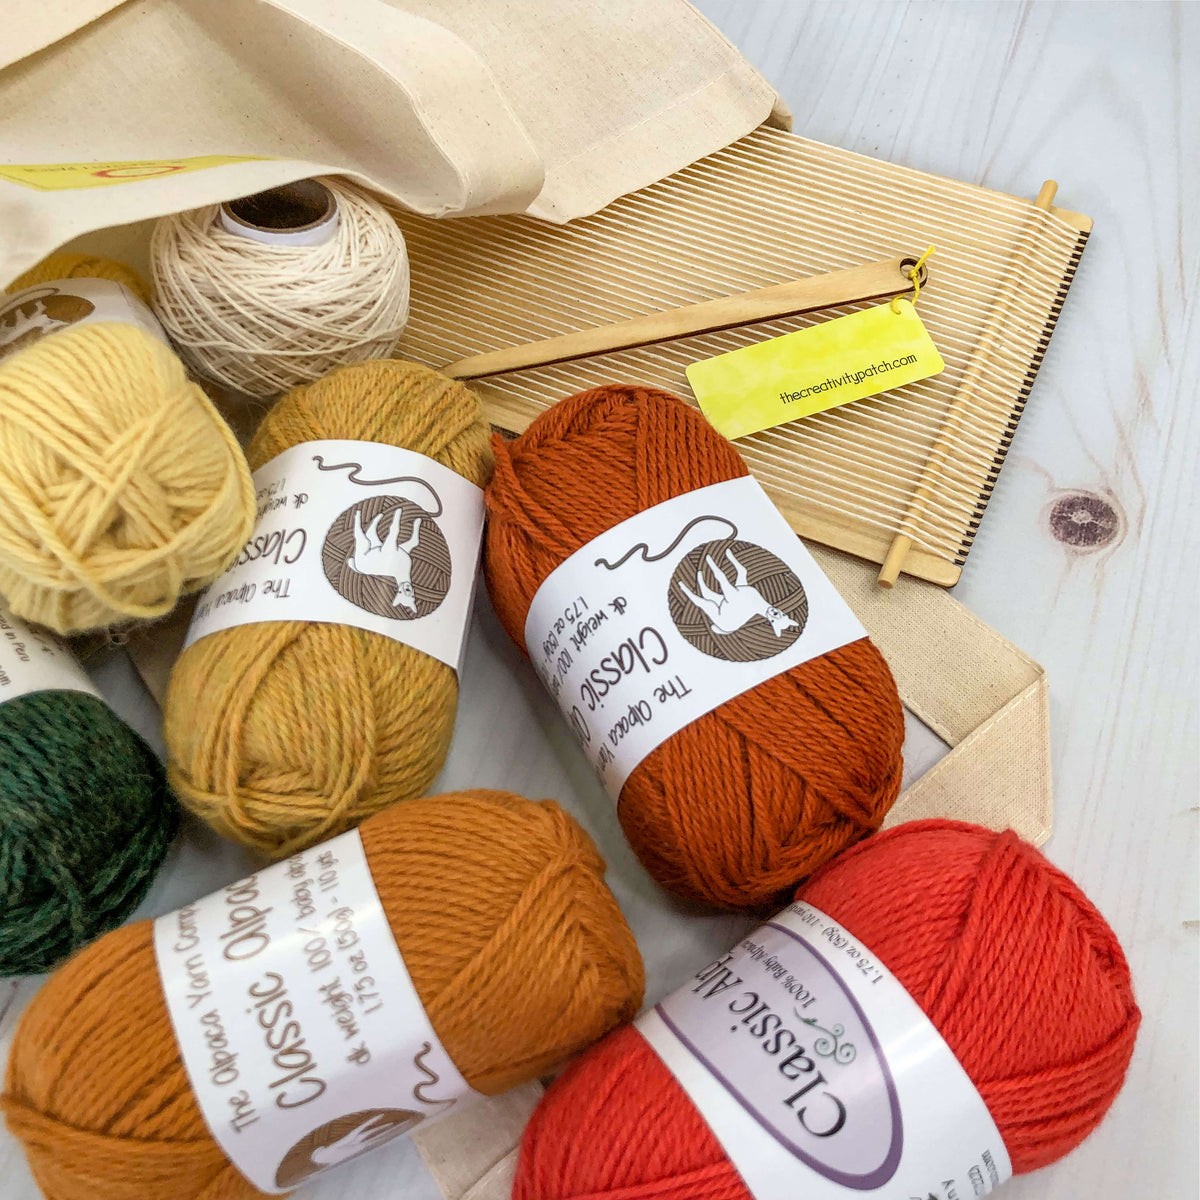 Wood Loom Weaving Kit - Alpaca Yarn  - Colors of Autumn